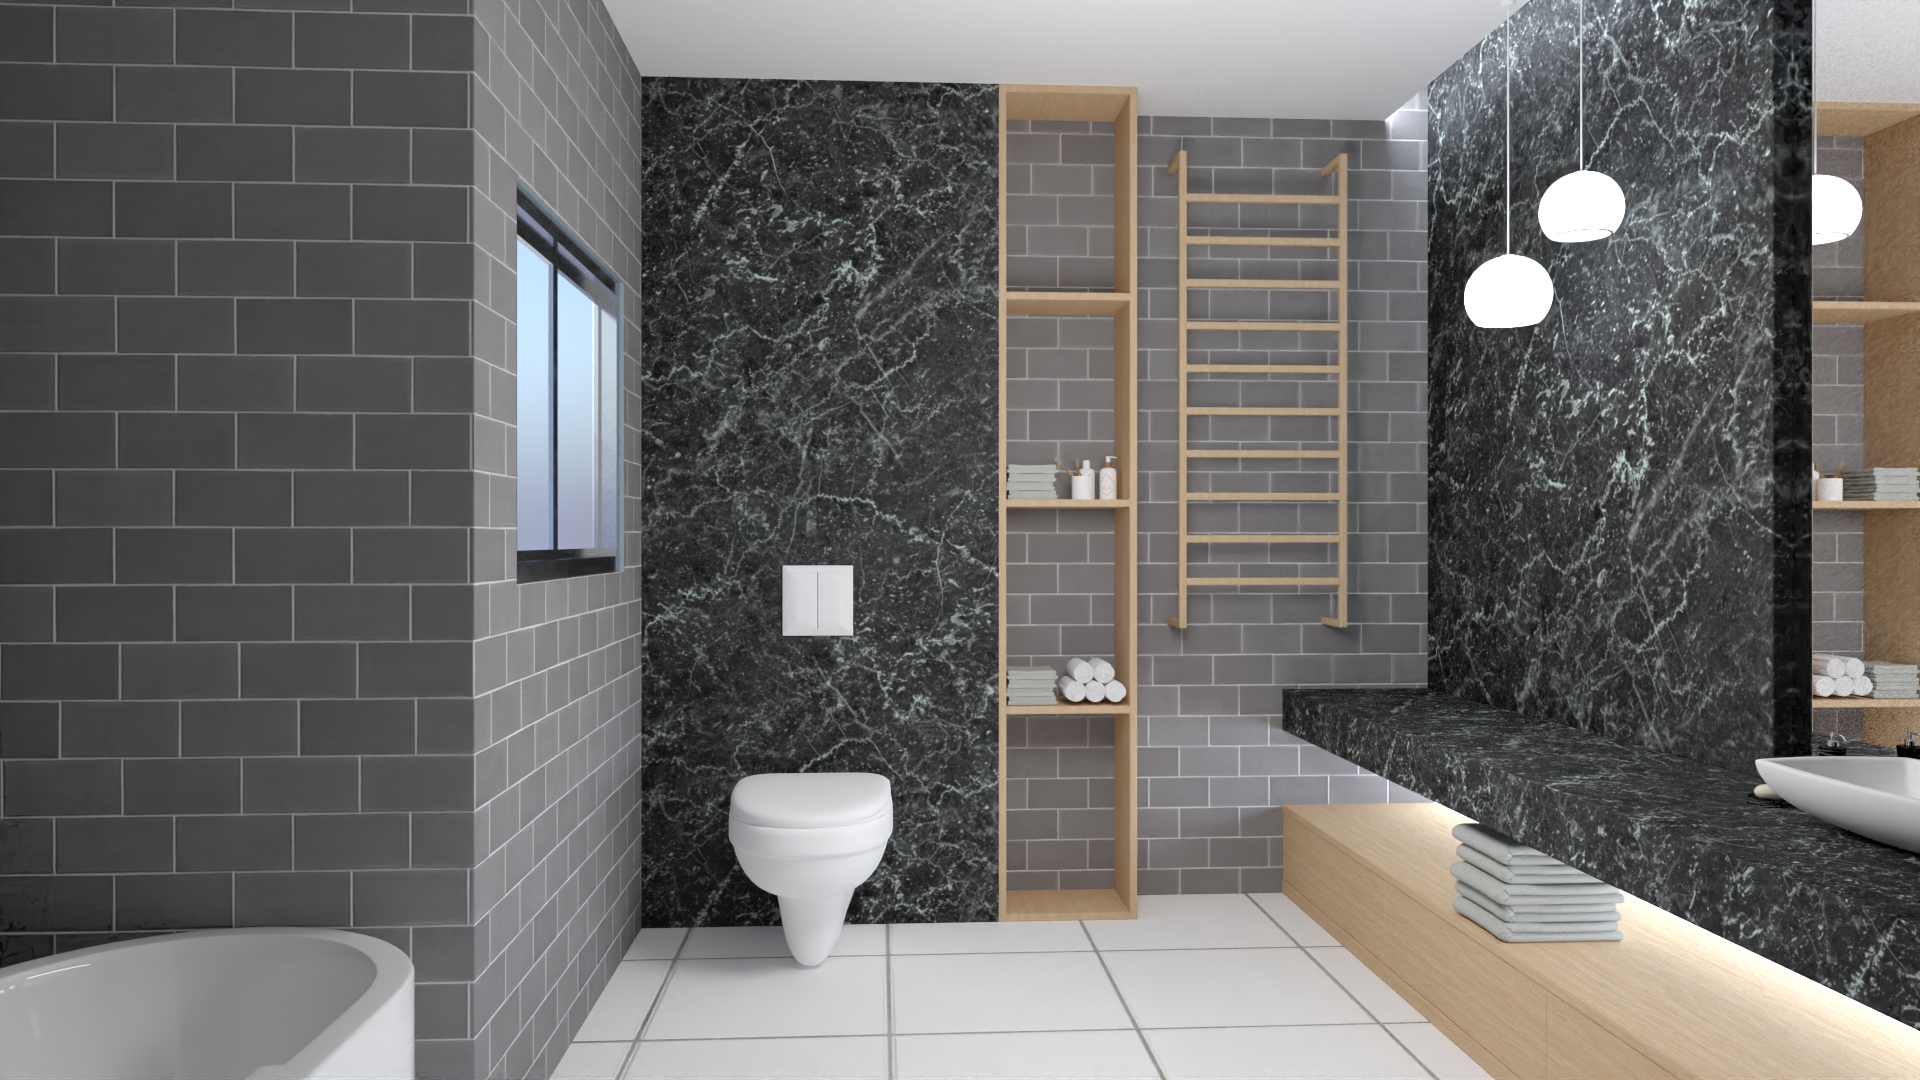 I will design 3d floor plan, interior, exterior, kitchen and bathroom 3d rendering, FiverrBox